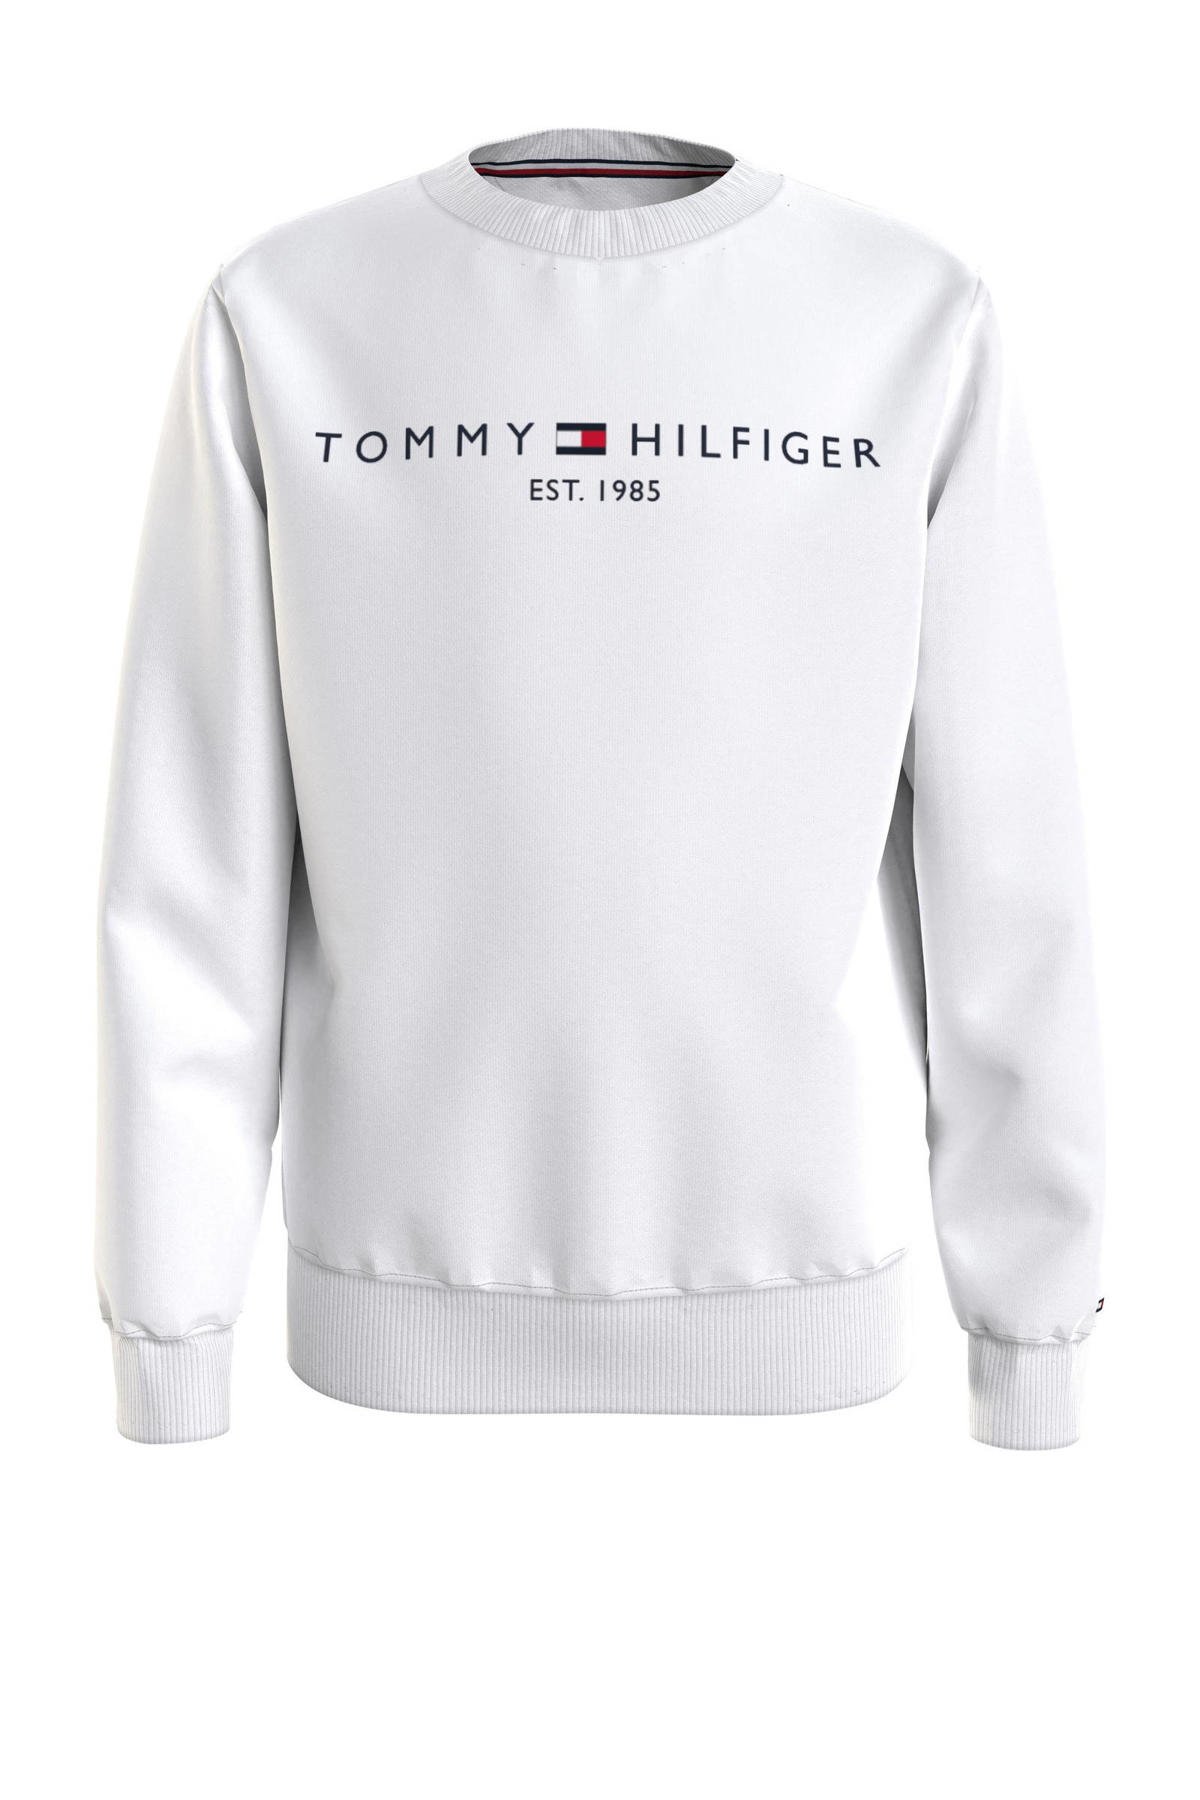 Uluru Zwakheid lid Tommy Hilfiger sweater met logo wit | wehkamp